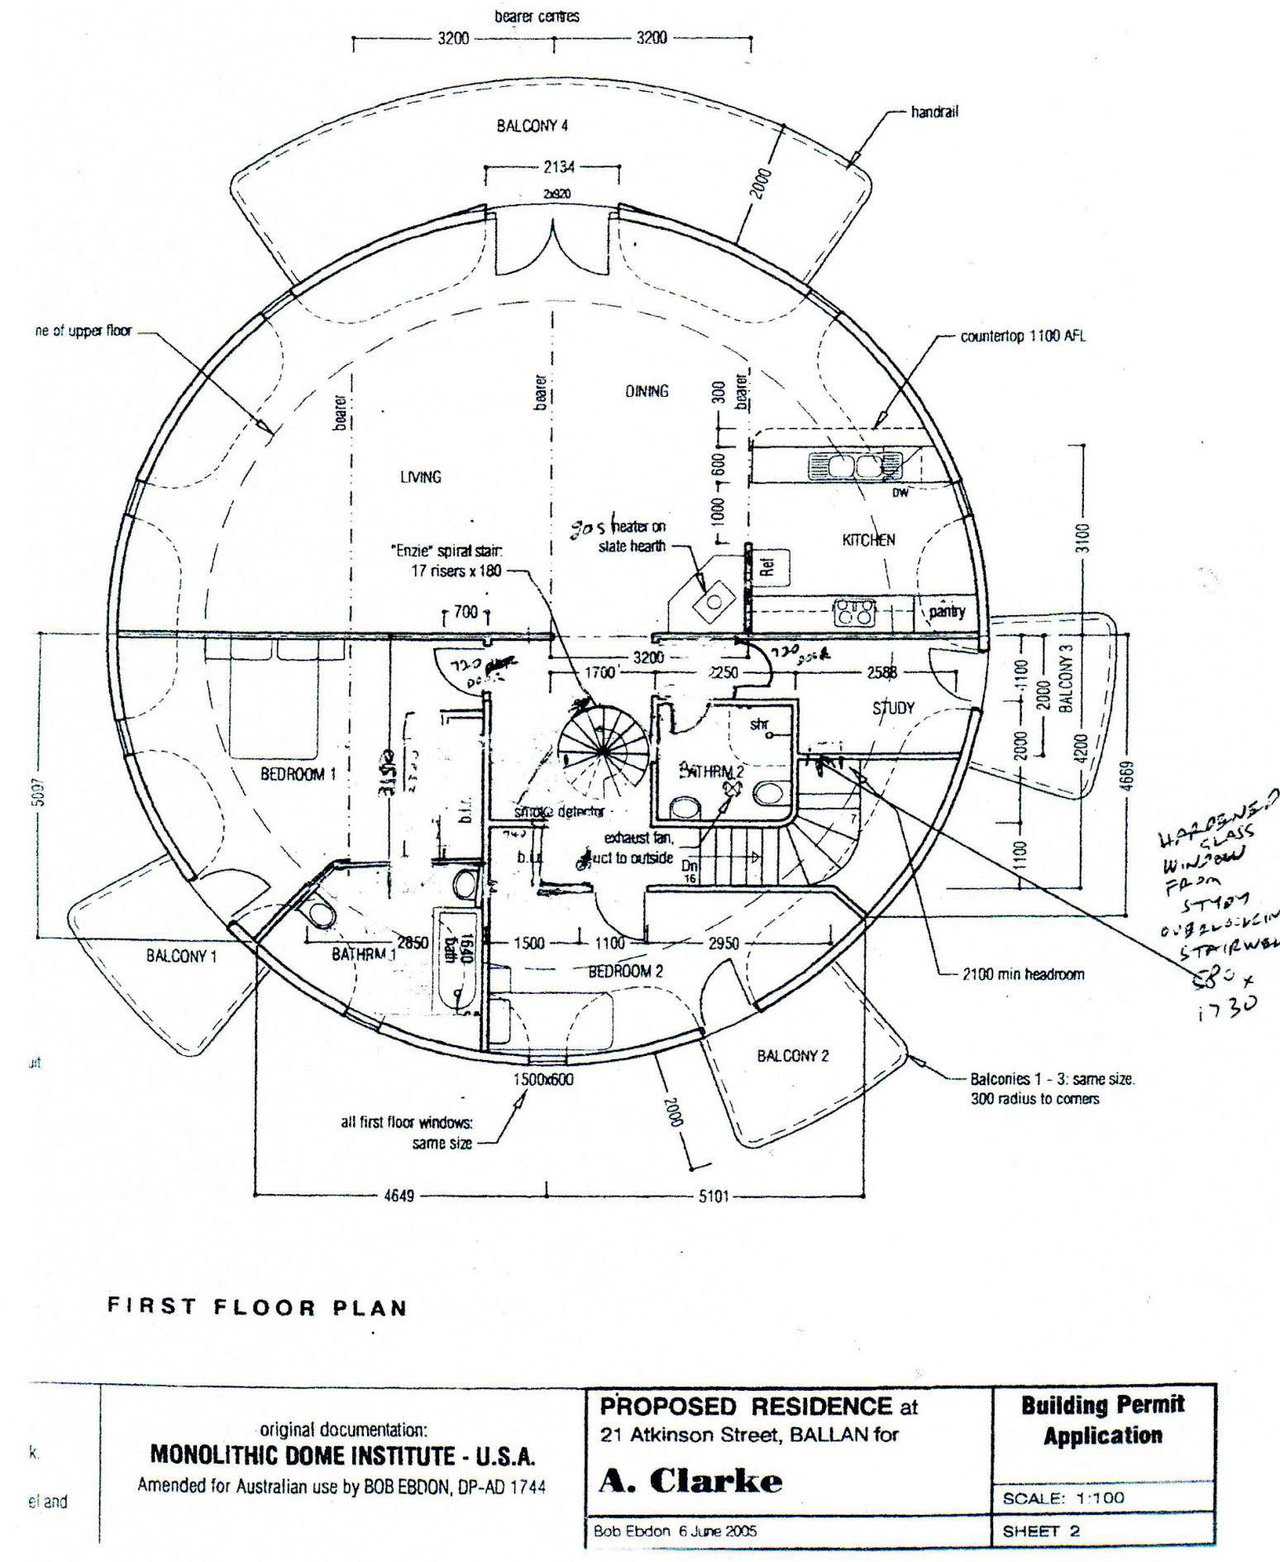 Floor plan of the dome, shown here in the upper floor